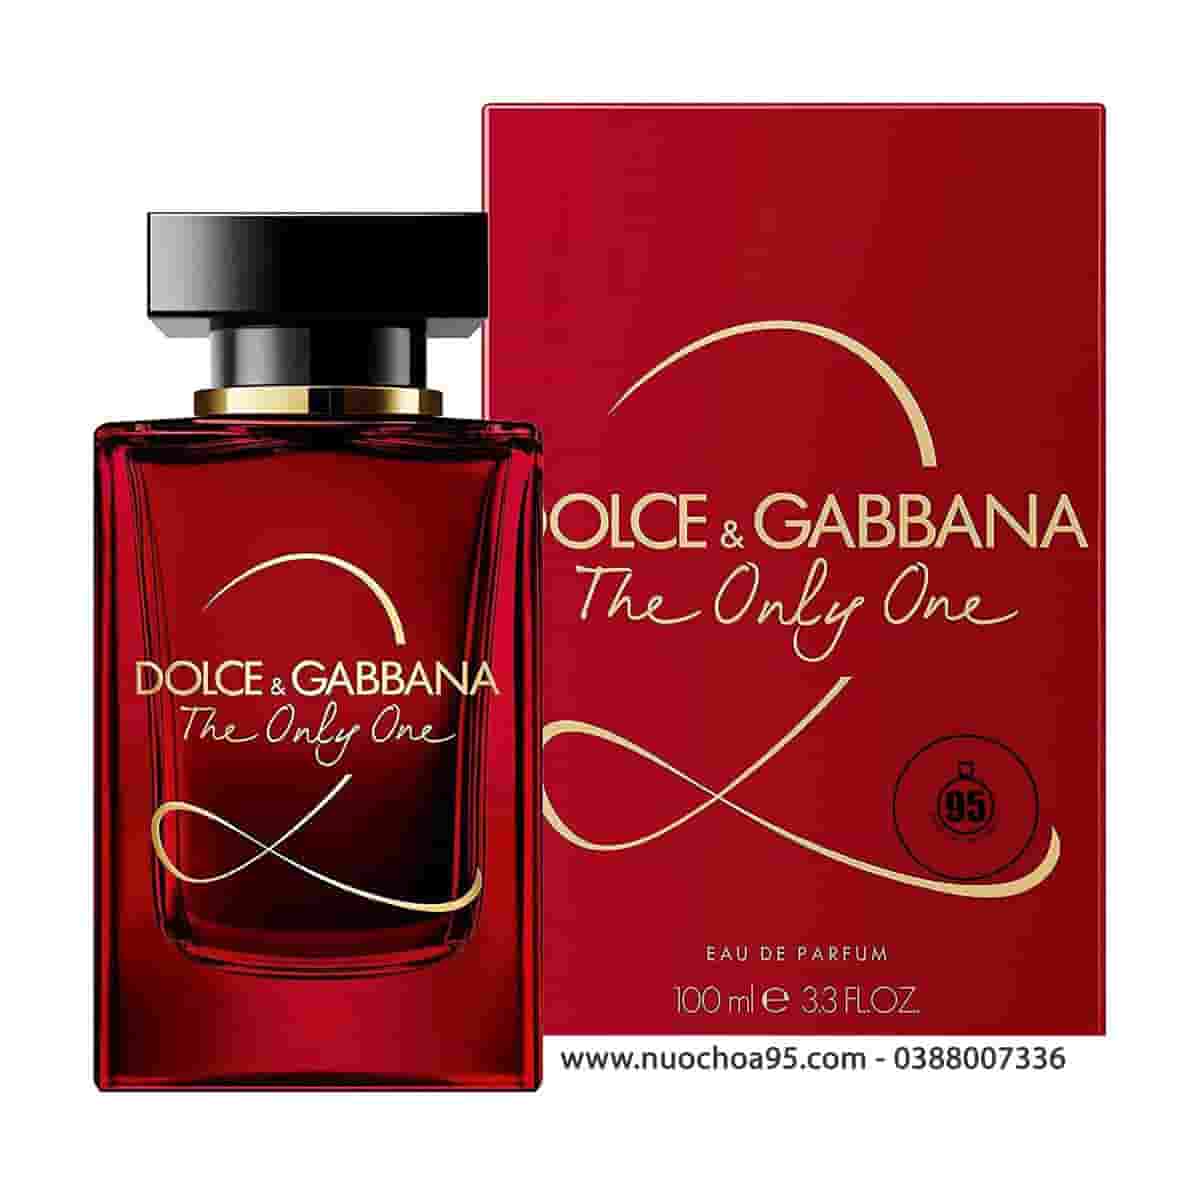 Nước hoa Dolce & Gabbana The Only One 2 